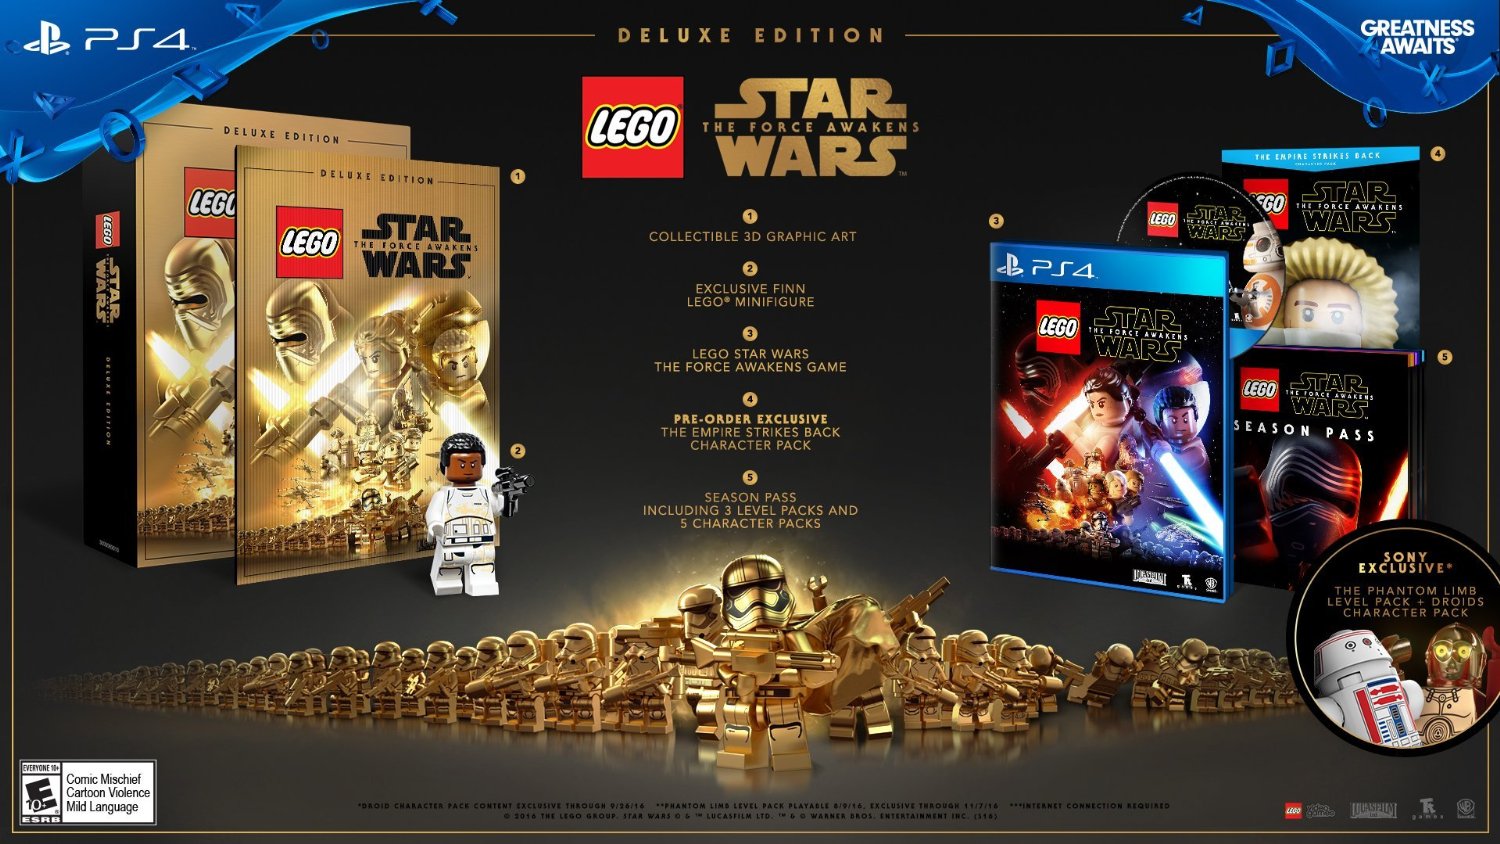 LEGO Star Wars The Force Awakens Demo Now 4 - FBTB